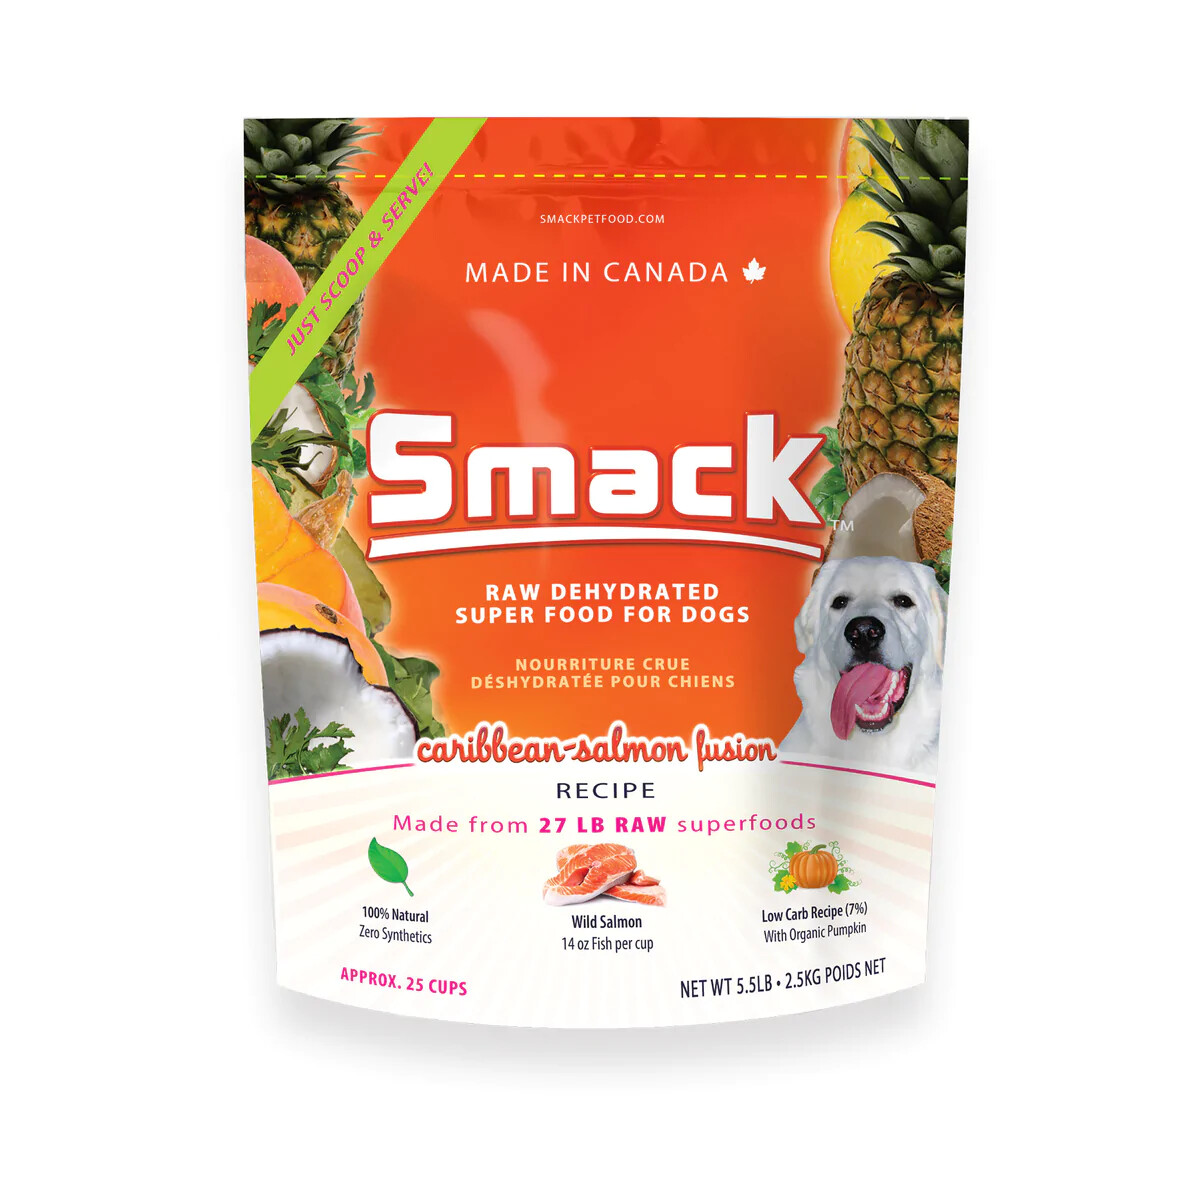 SMACK Dog Caribbean-Salmon Fusion 25G